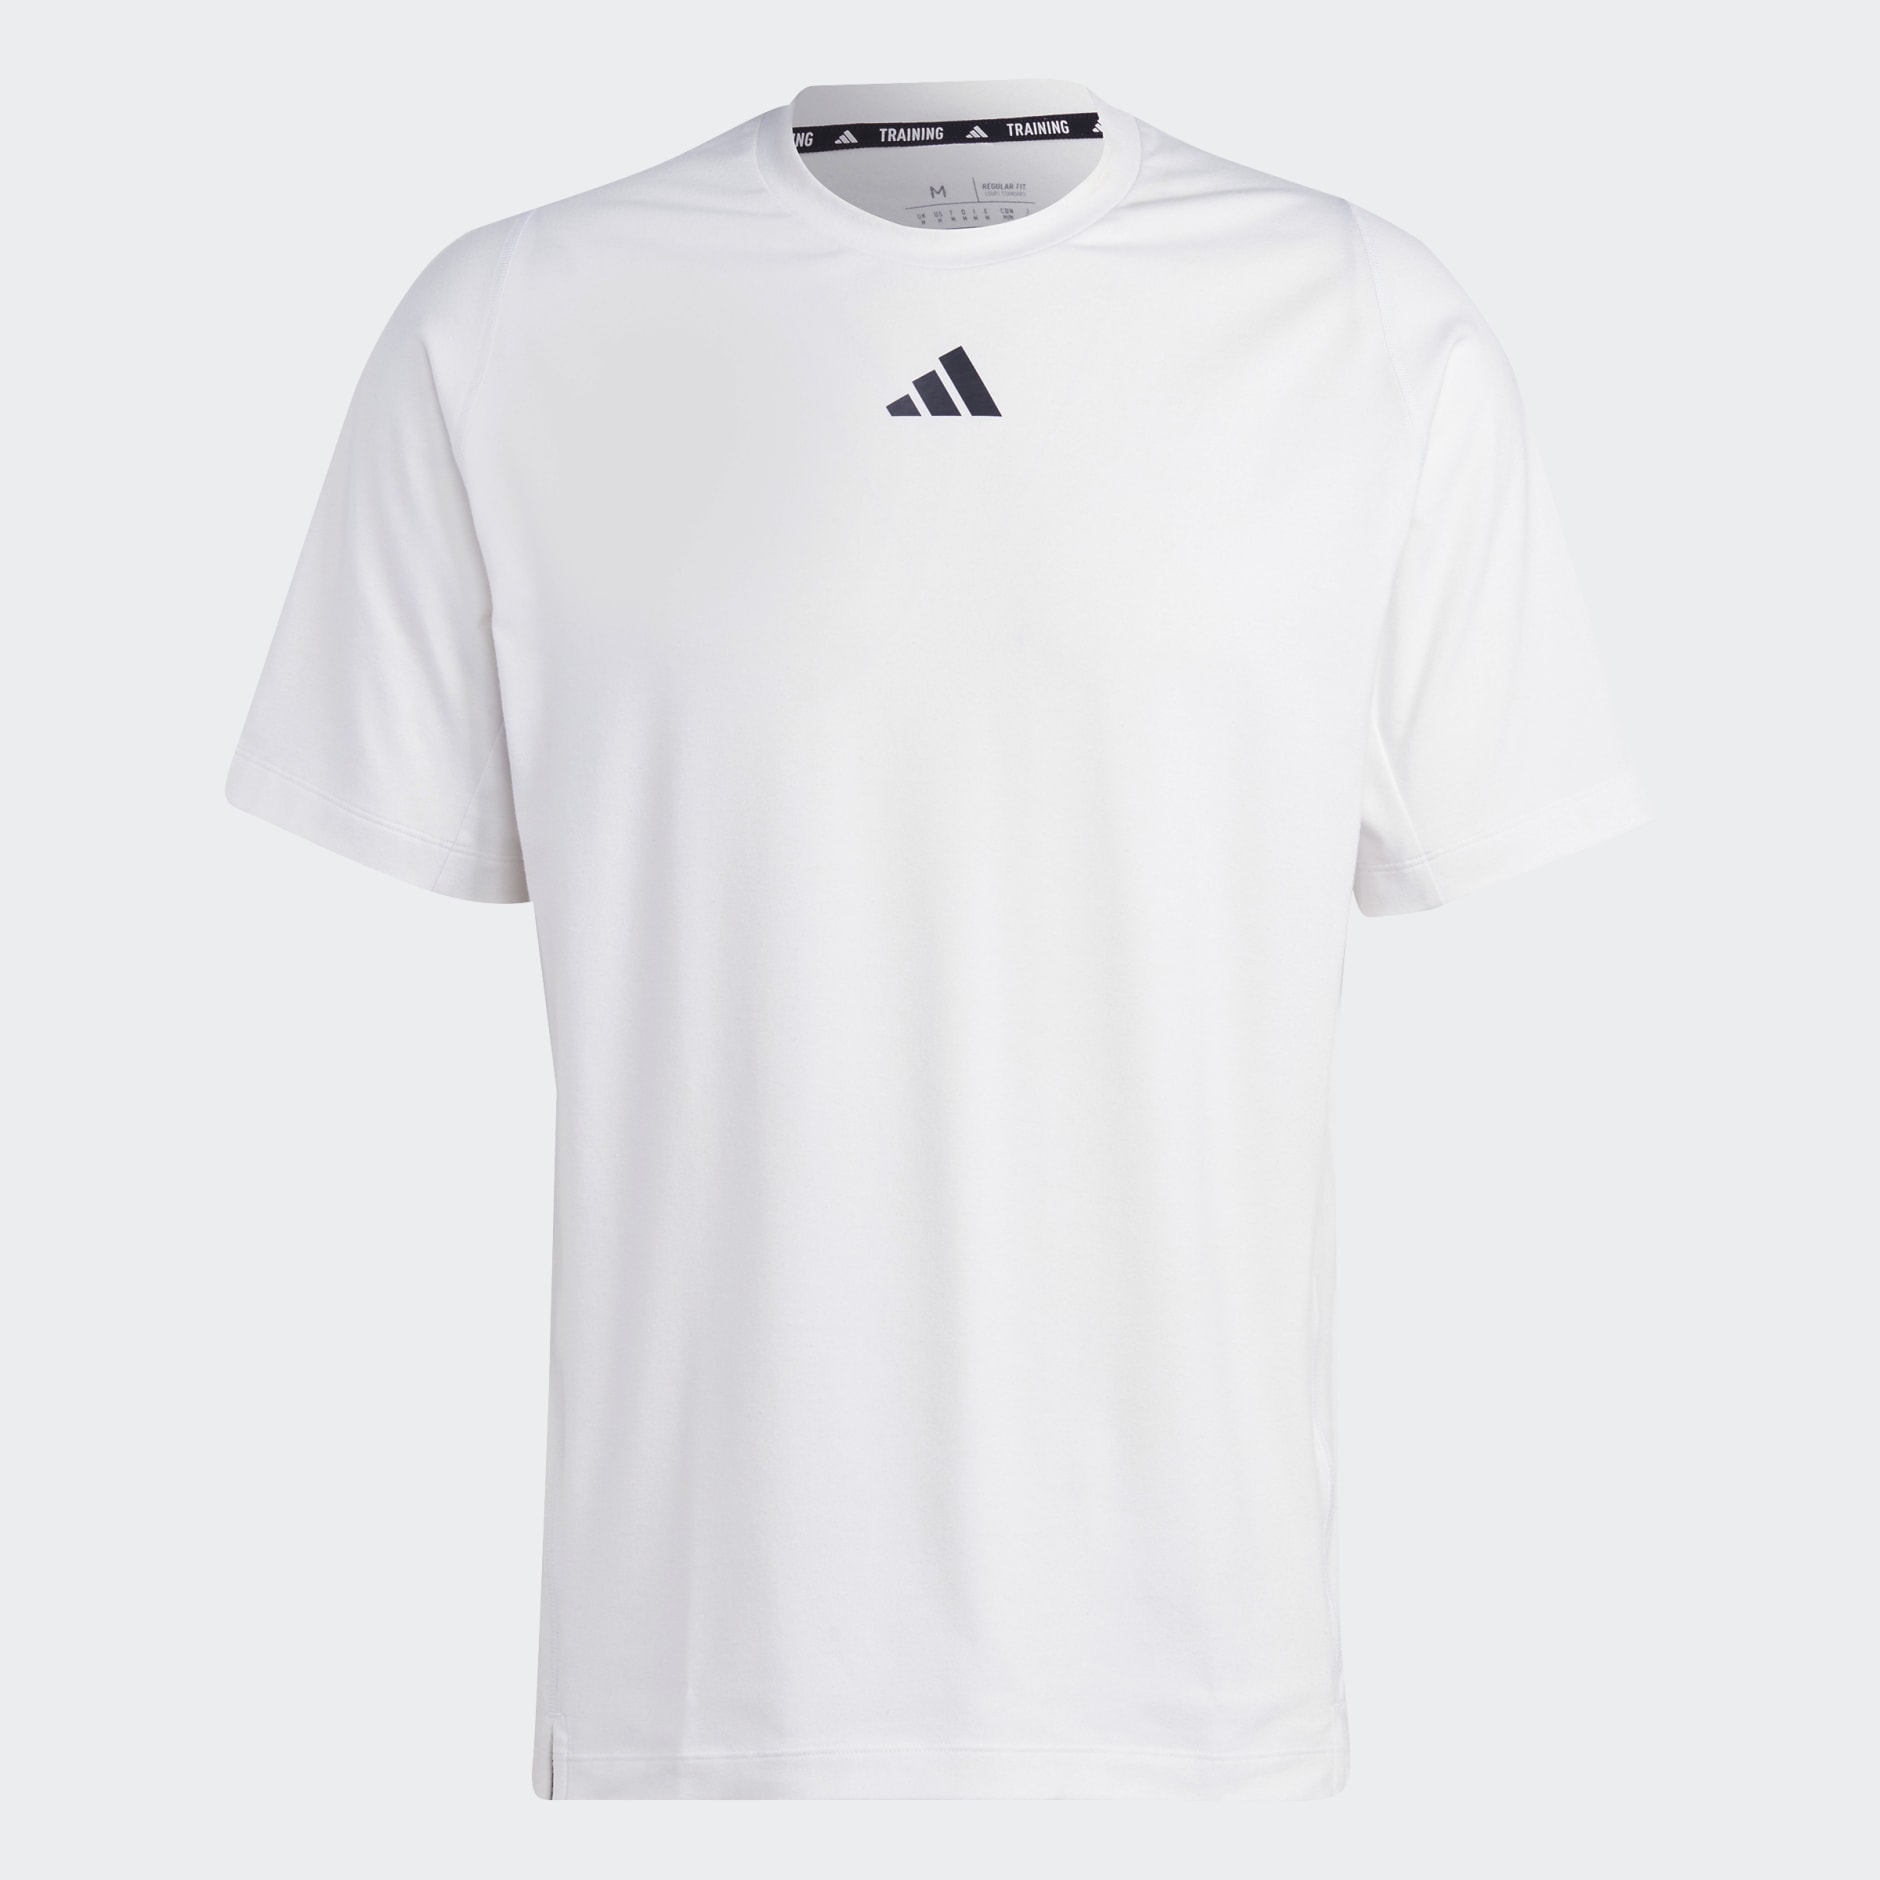 Men's Clothing - Train Icons 3 Bar Logo Training Tee - White | adidas ...